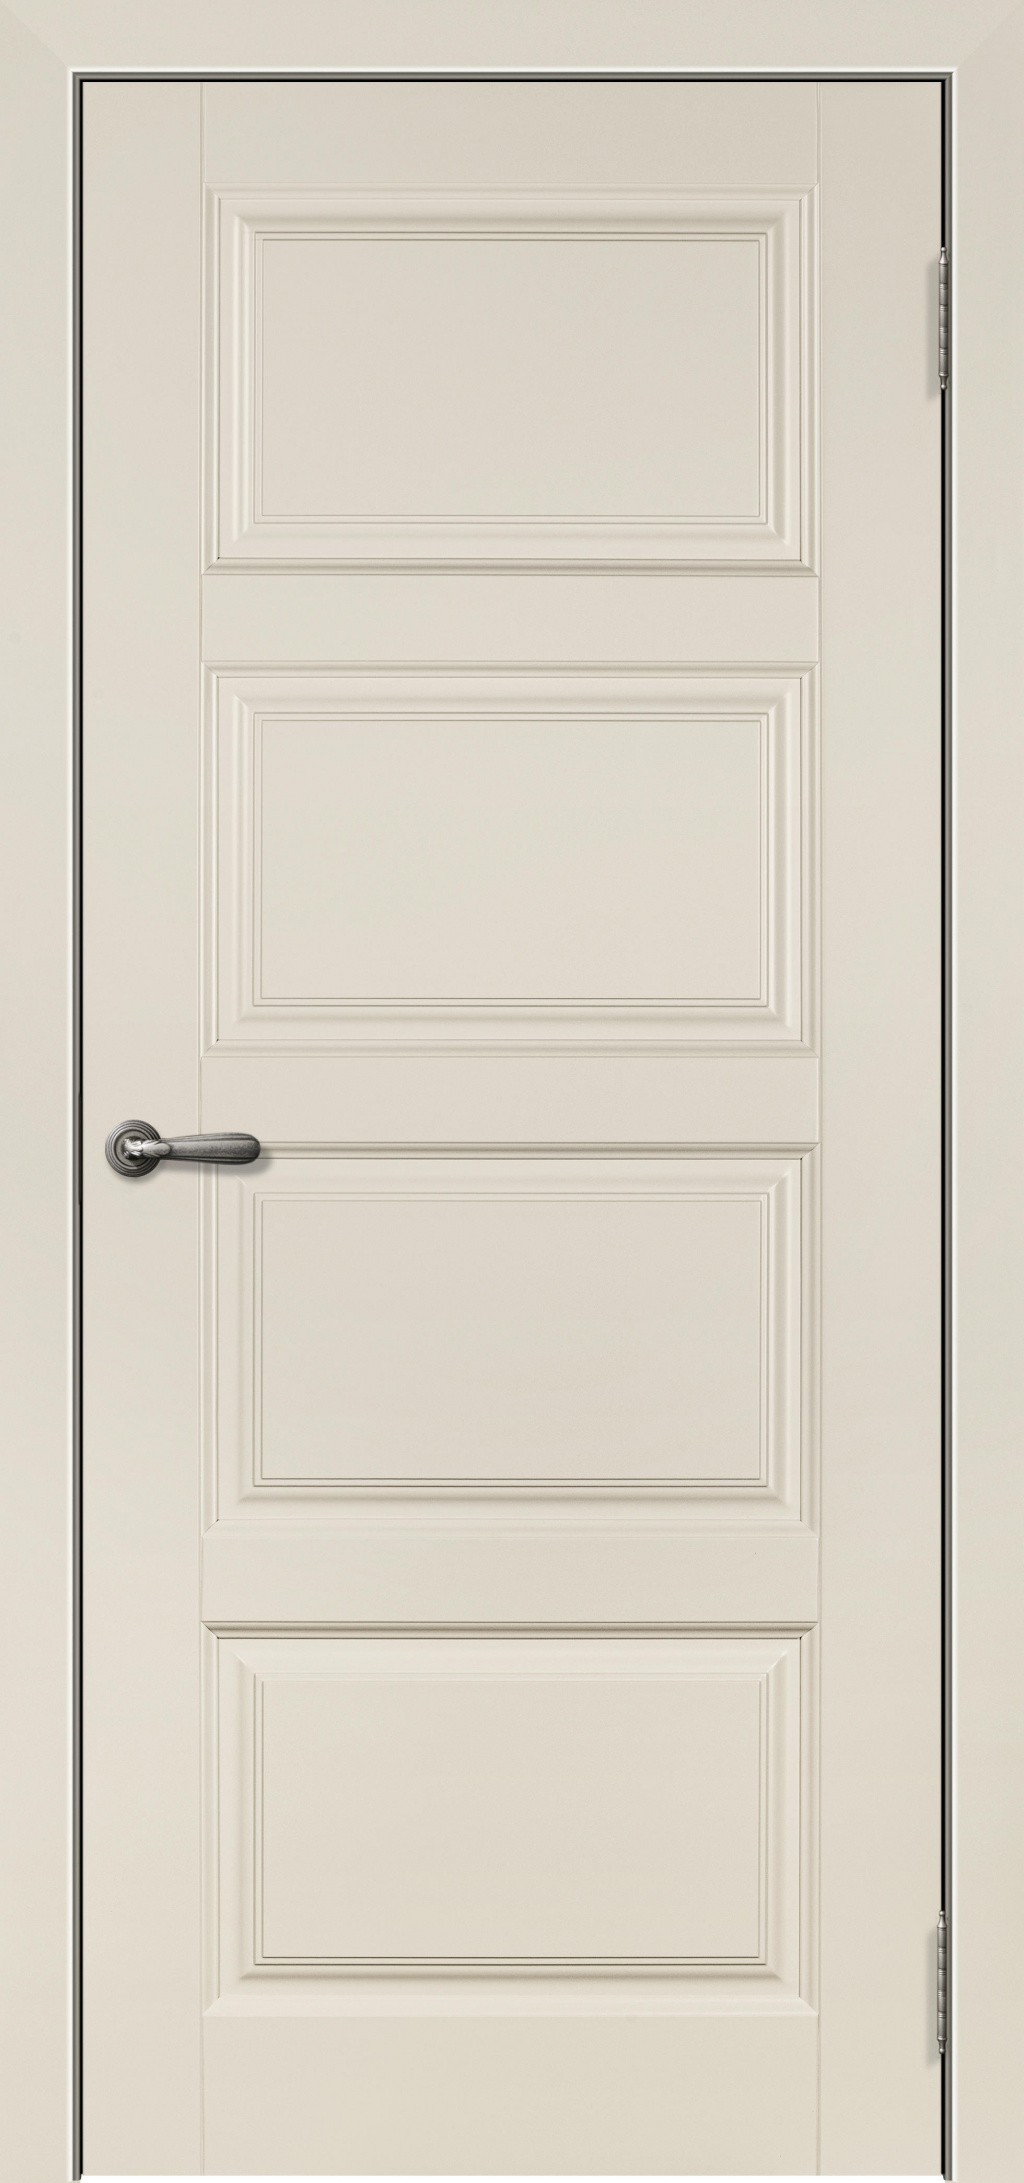 Тандор Межкомнатная дверь Венерди ДГ, арт. 7168 - фото №1